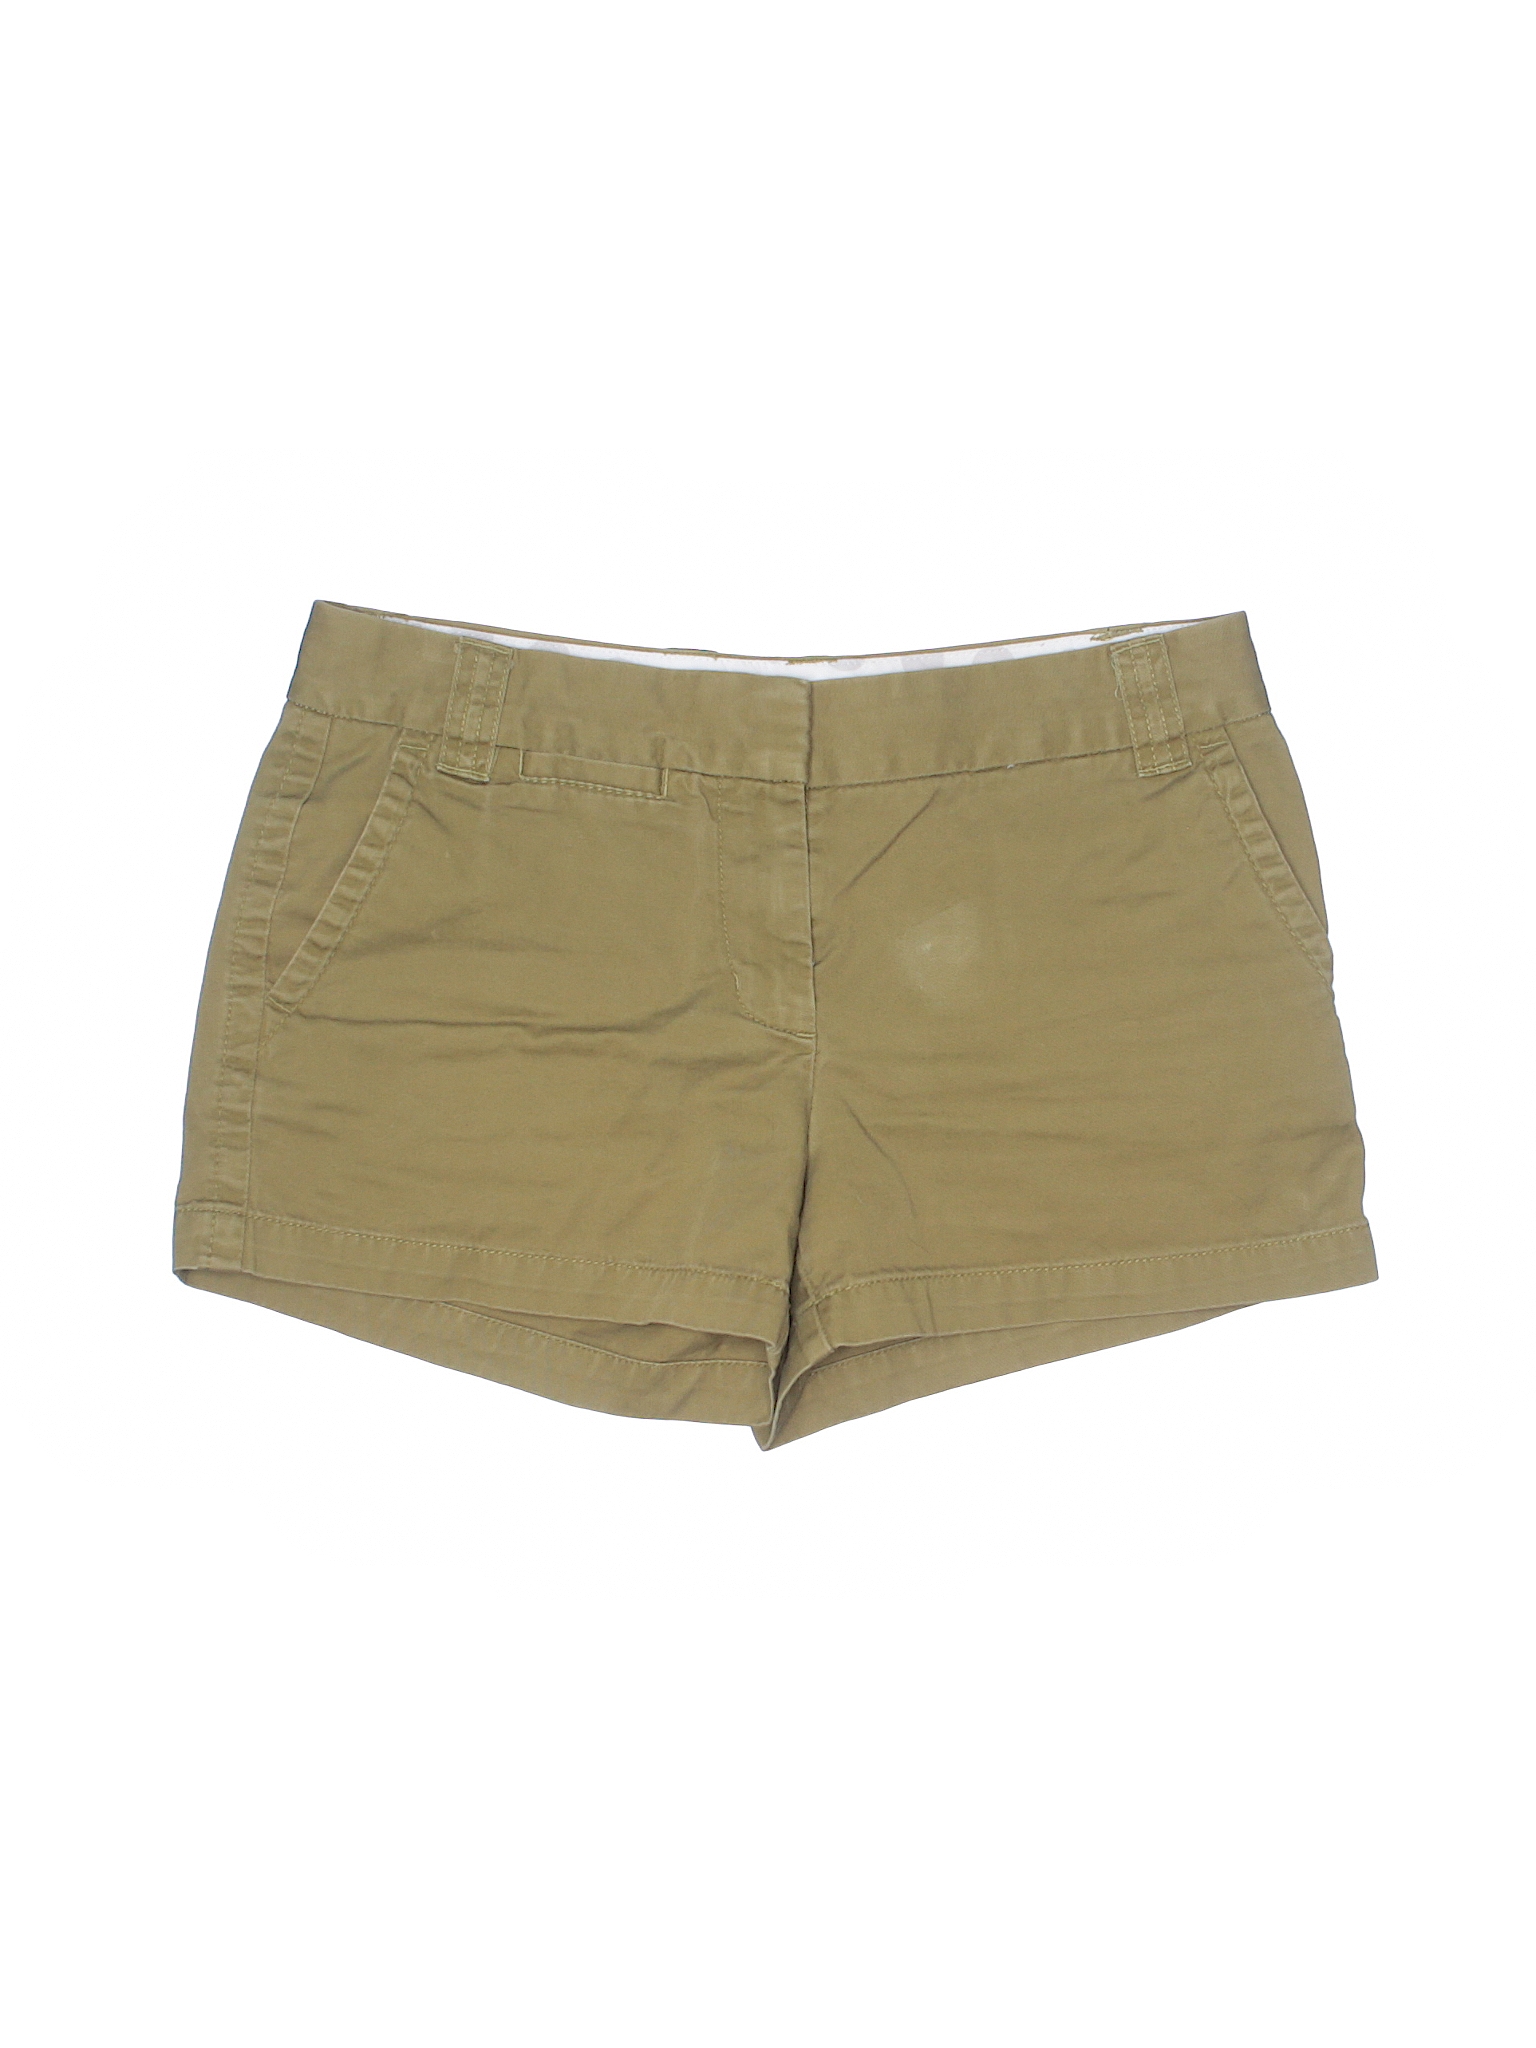 J. Crew 100% Cotton Solid Green Khaki Shorts Size 4 - 95% off | thredUP